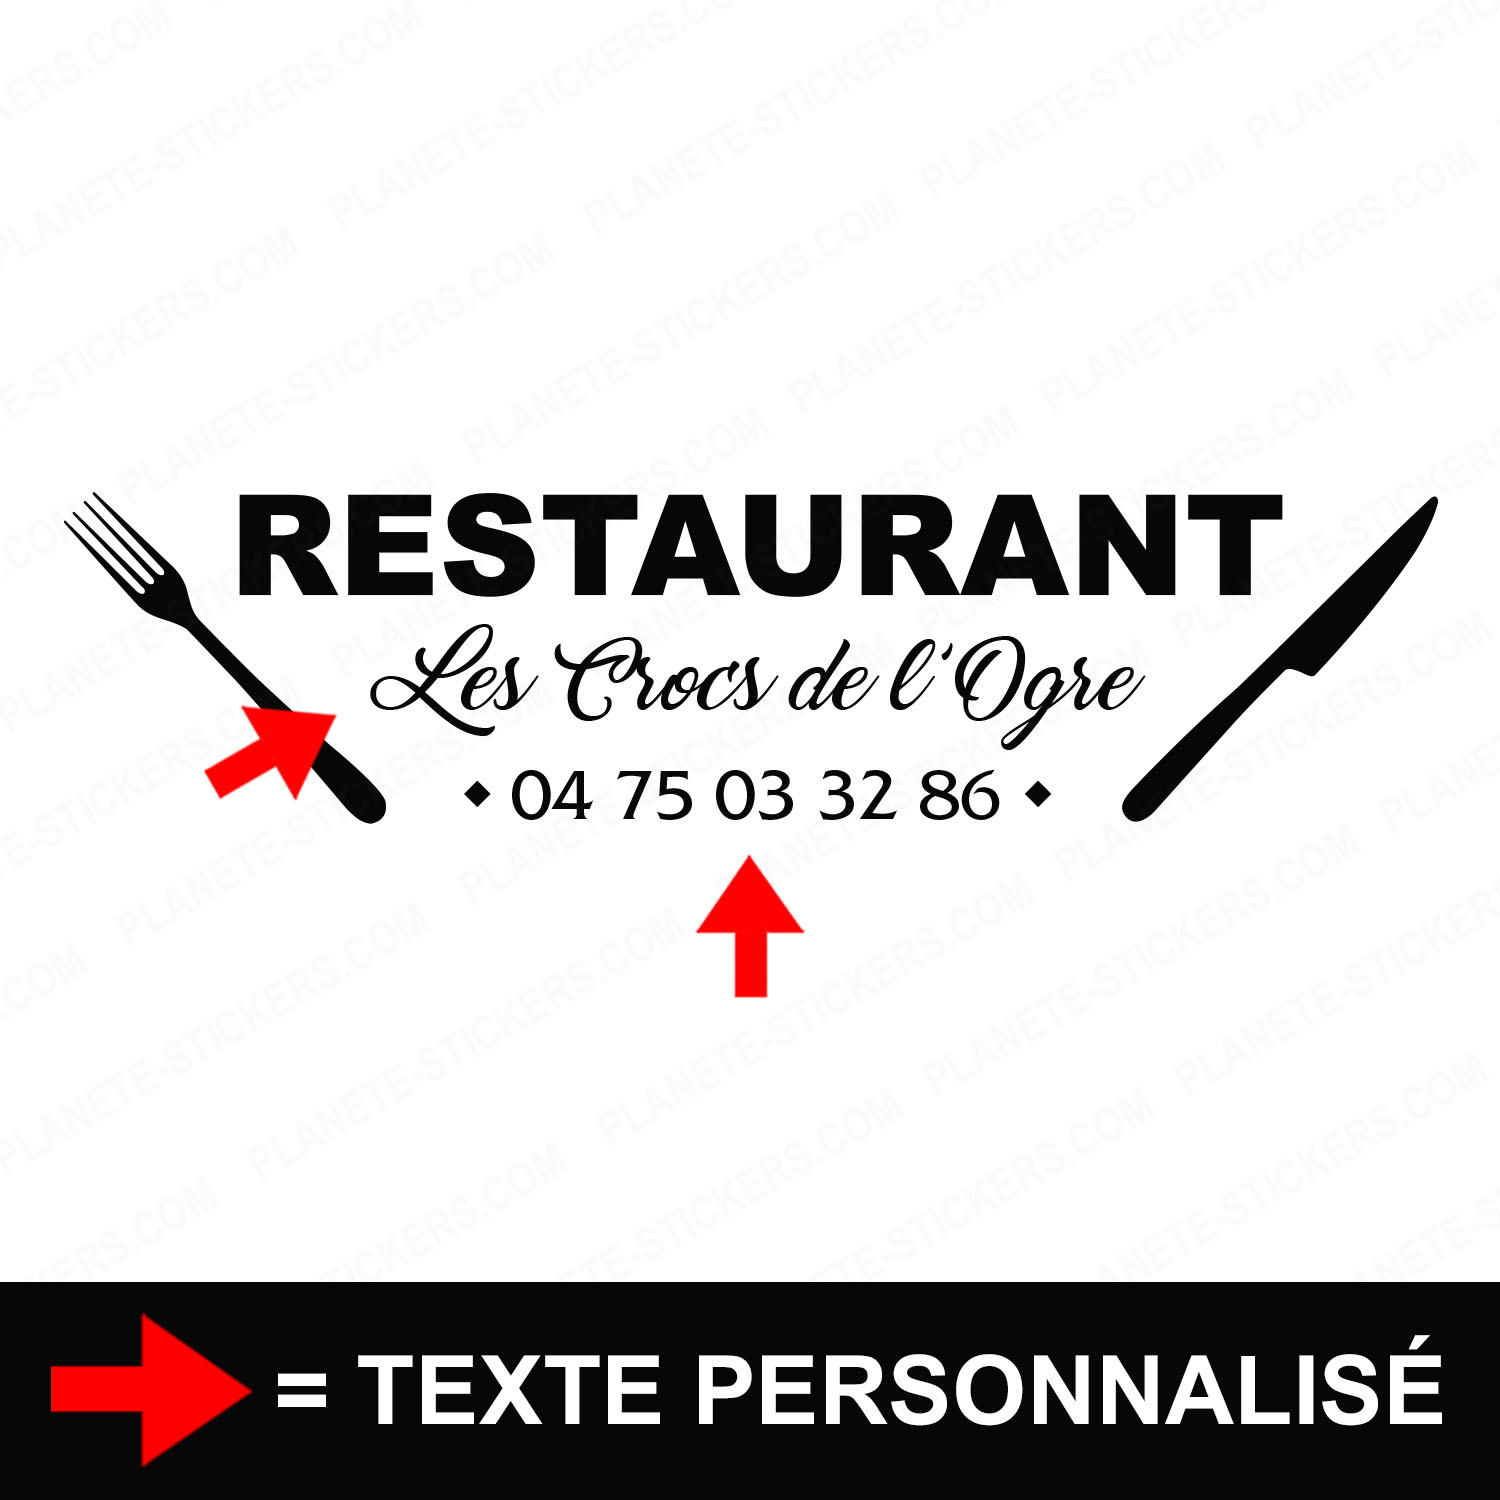 ref8restaurantvitrine-stickers-restaurant-vitrine-restaurant-sticker-personnalisé-autocollant-pro-restaurateur-vitre-resto-professionnel-logo-couverts-2